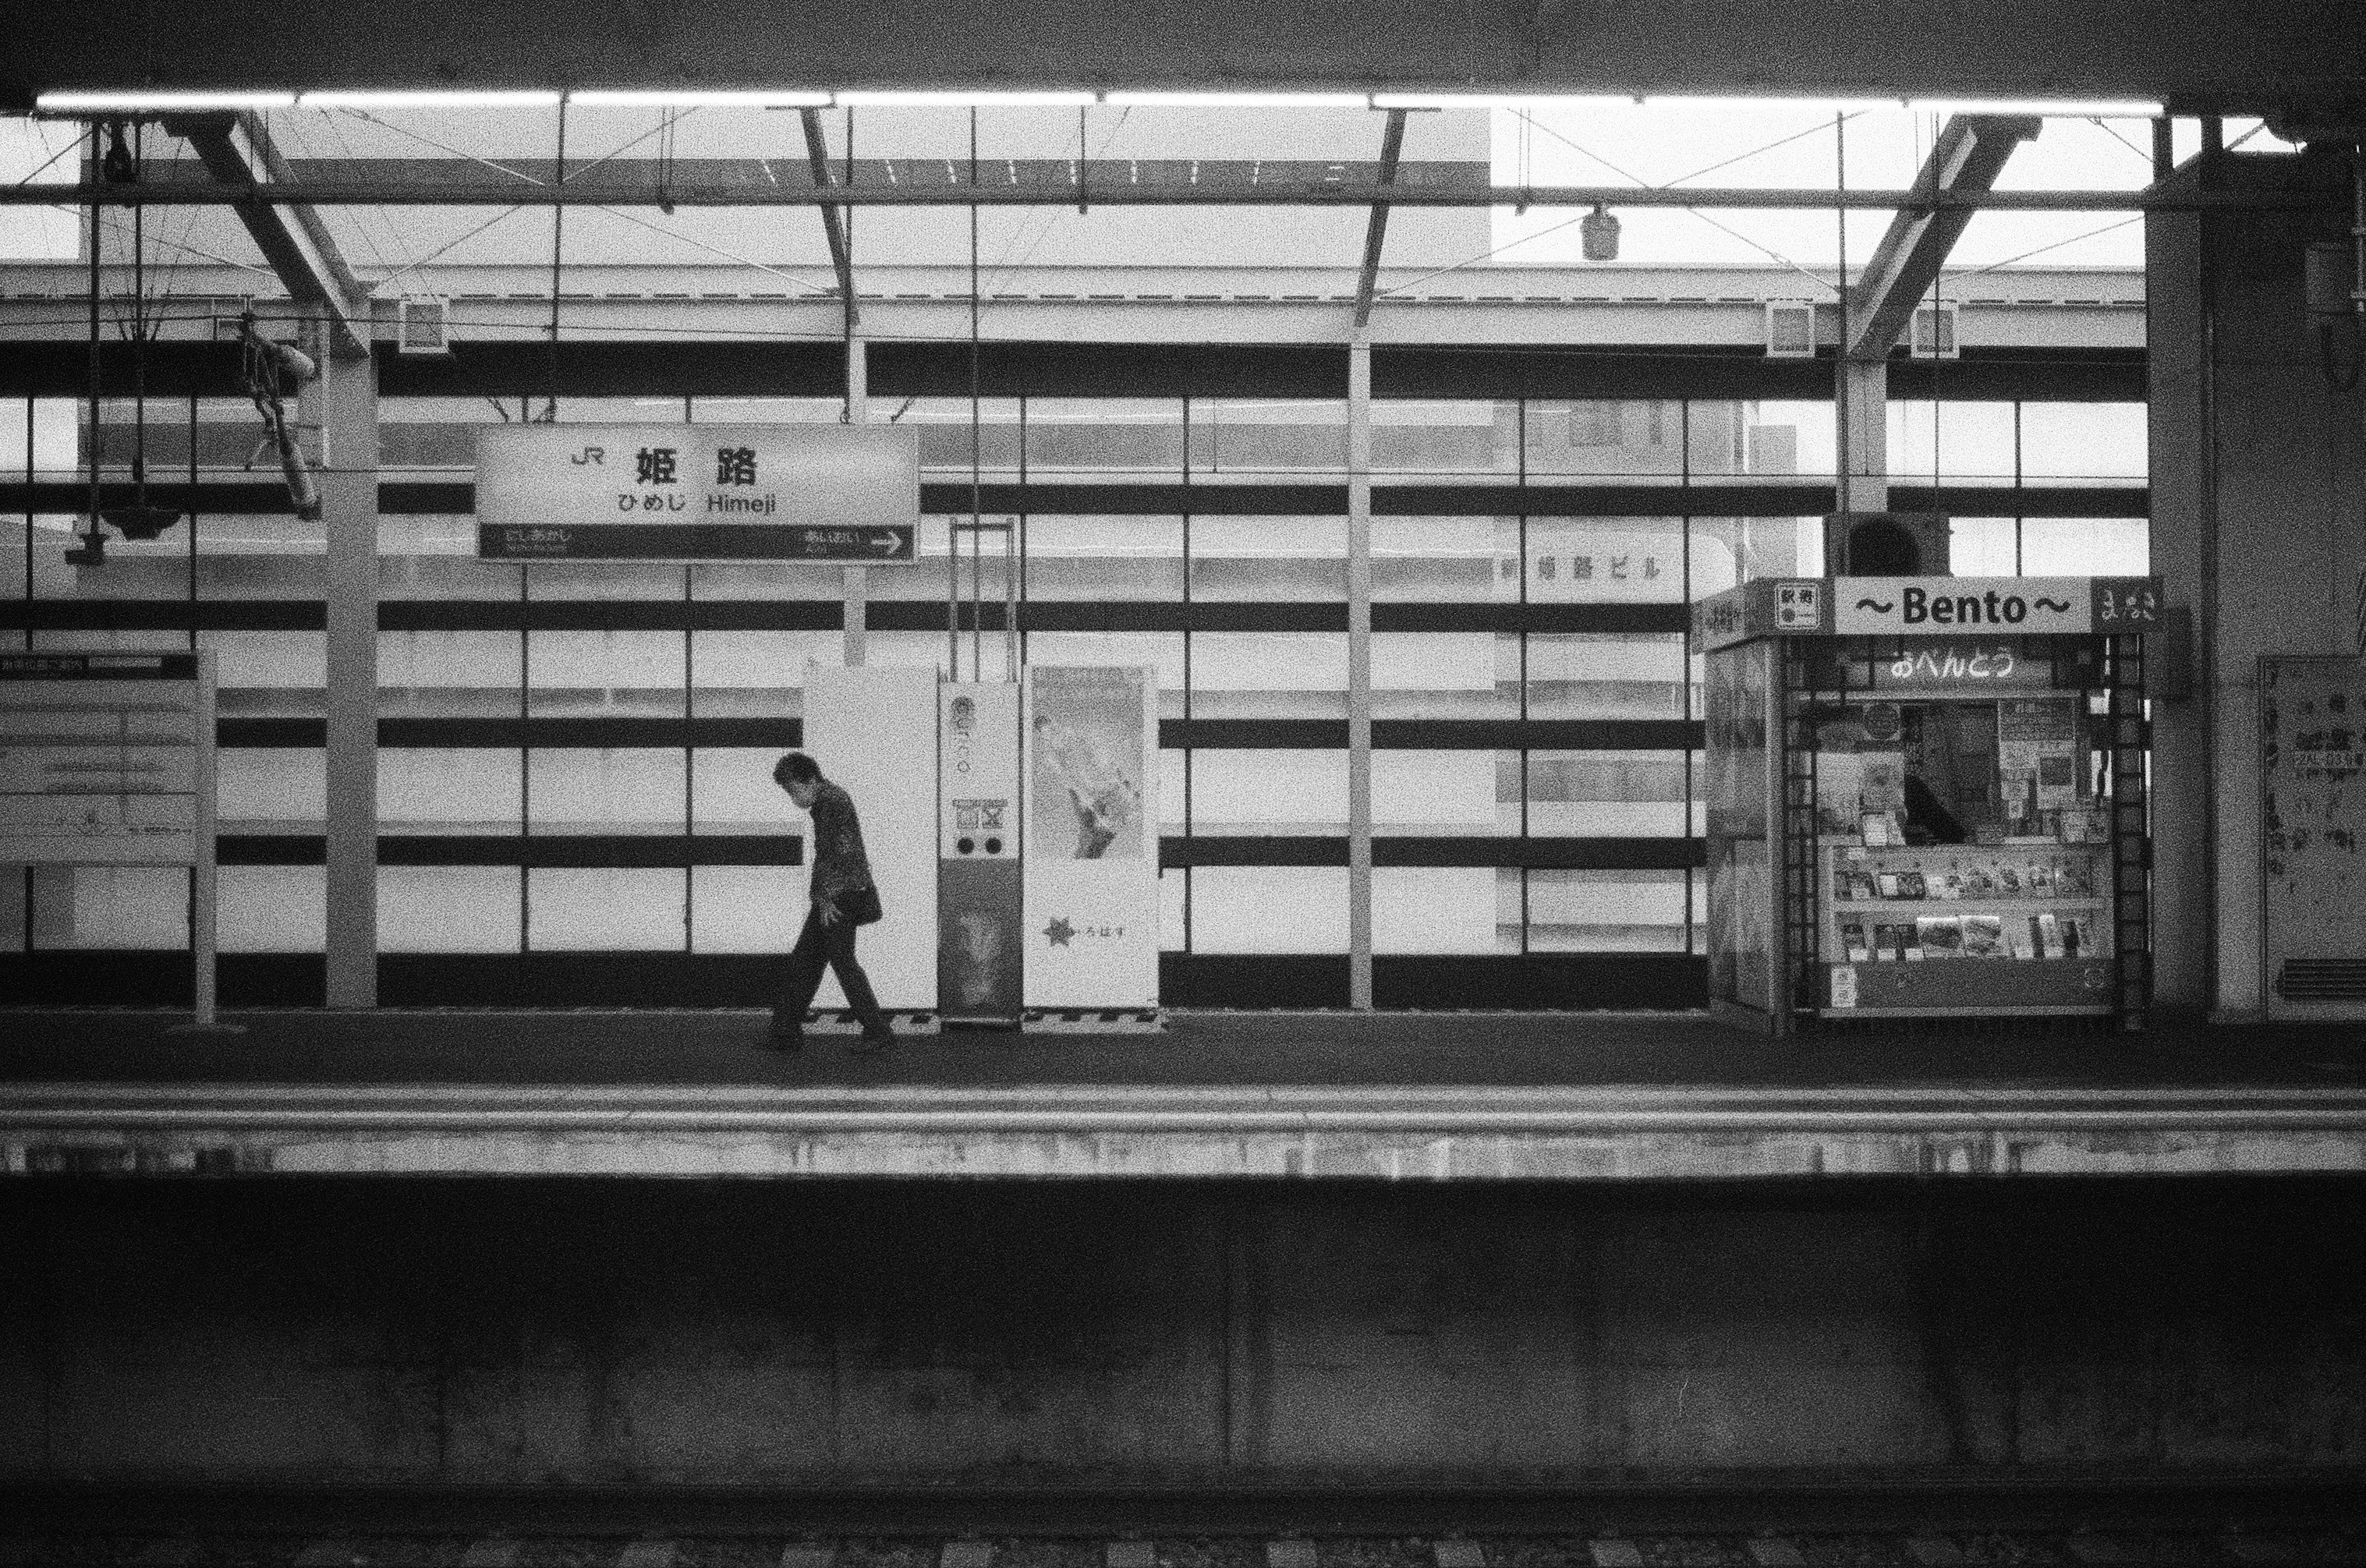 Okayama - A man walks across the empty platform at Okayama Station